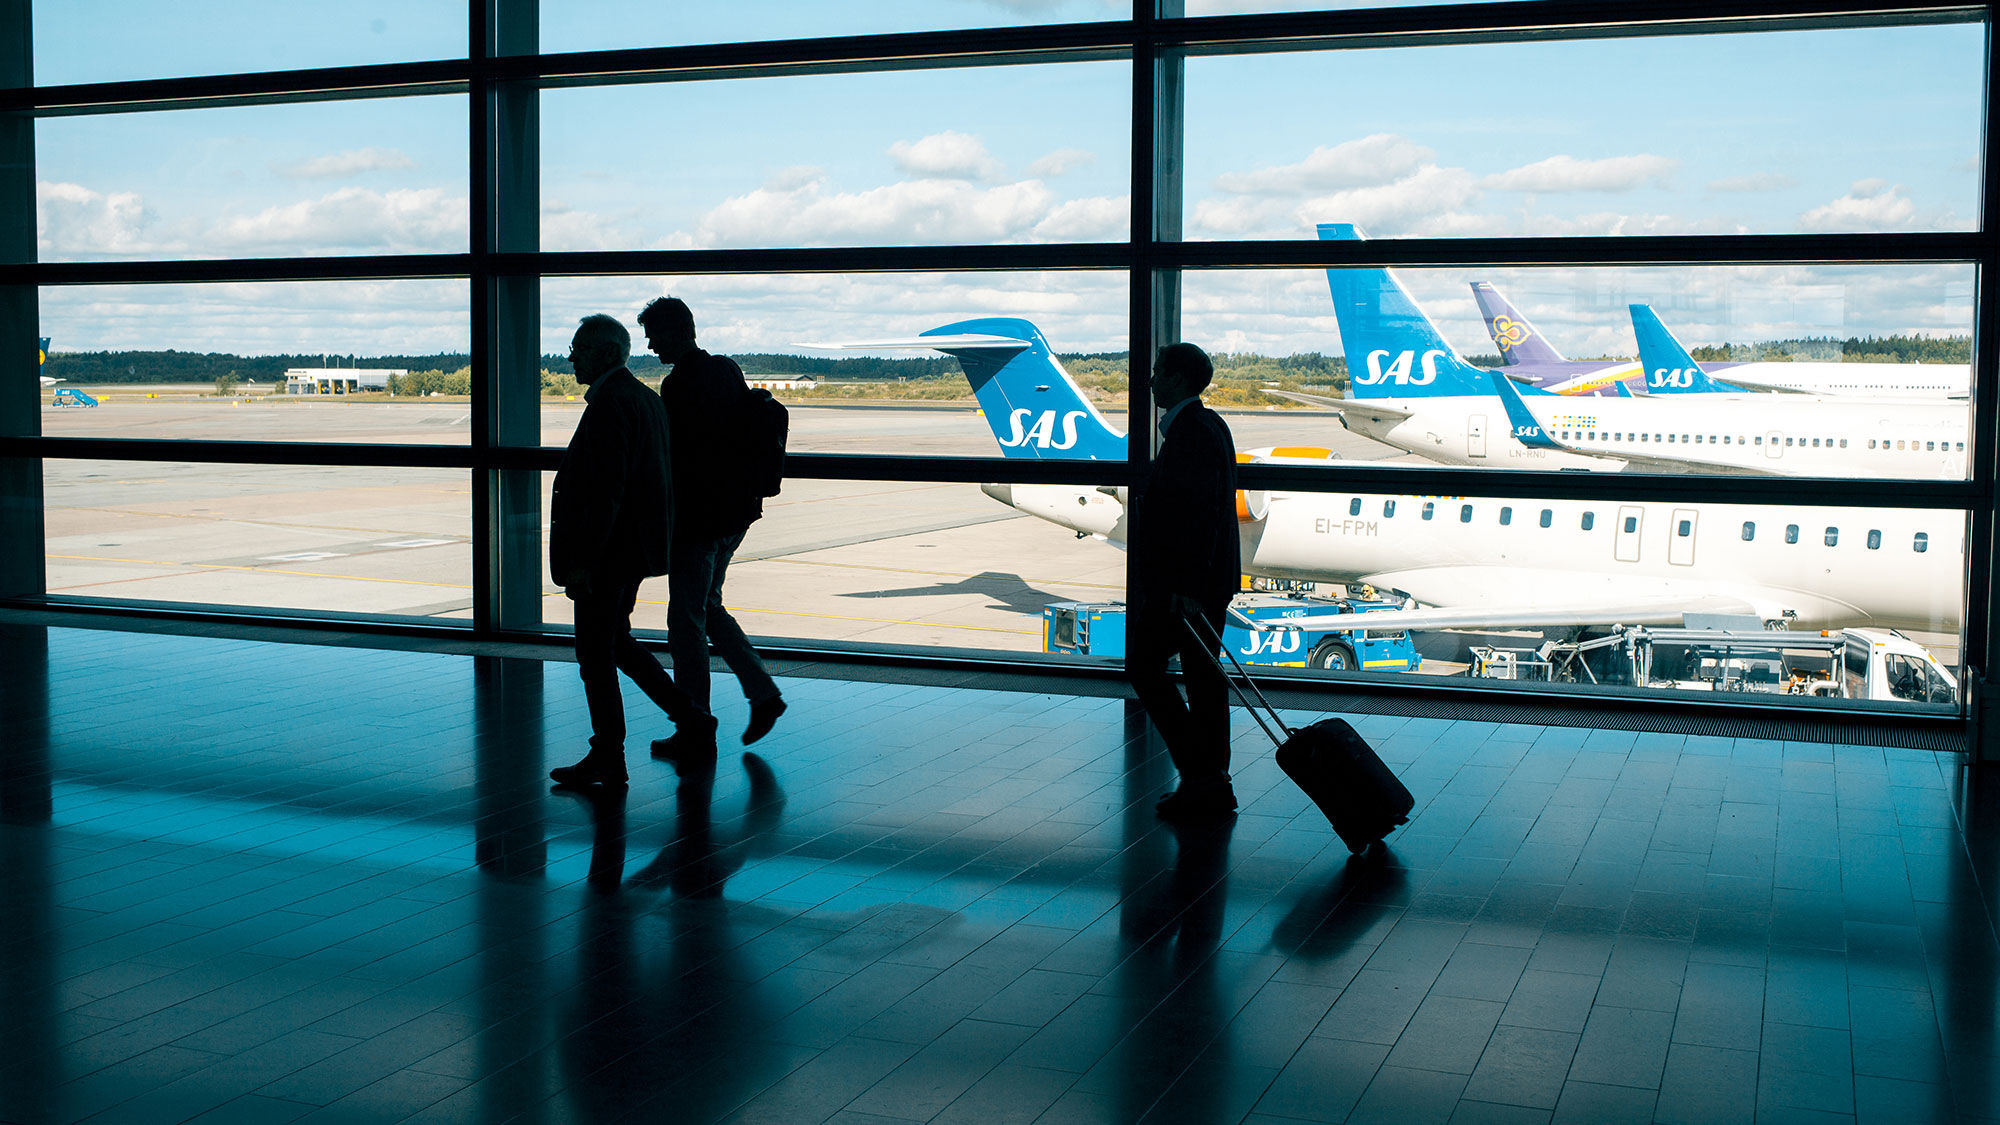 When the plane arrived. Аэропорт Арланда Швеция. At the Airport. Зал ожидания в аэропорту с самолетом панорама. Аэропорт Стокгольма видеоэкскурсия.